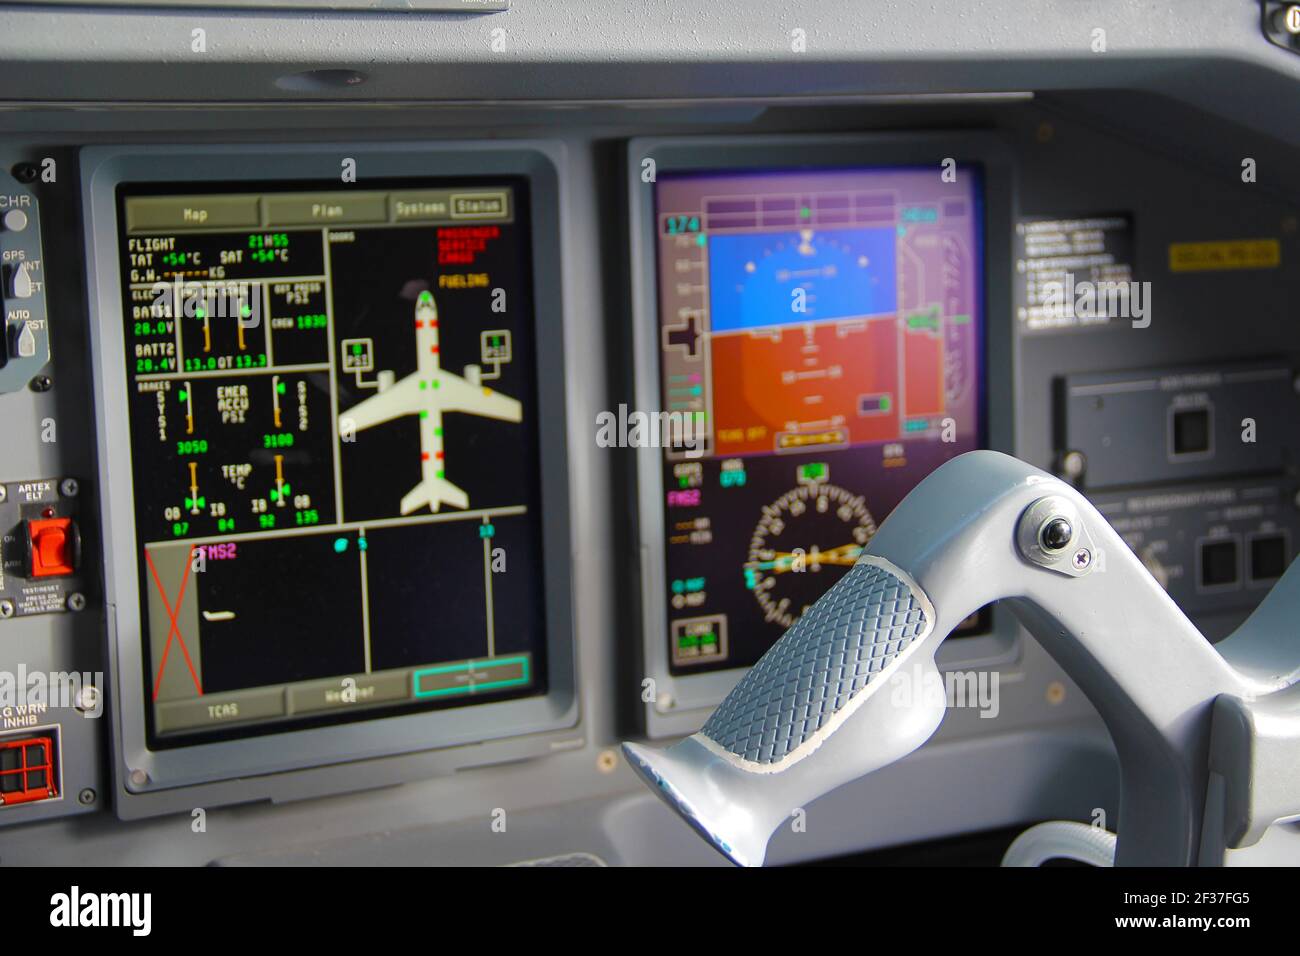 Electronic Flight Instrument System Display Stock Photo